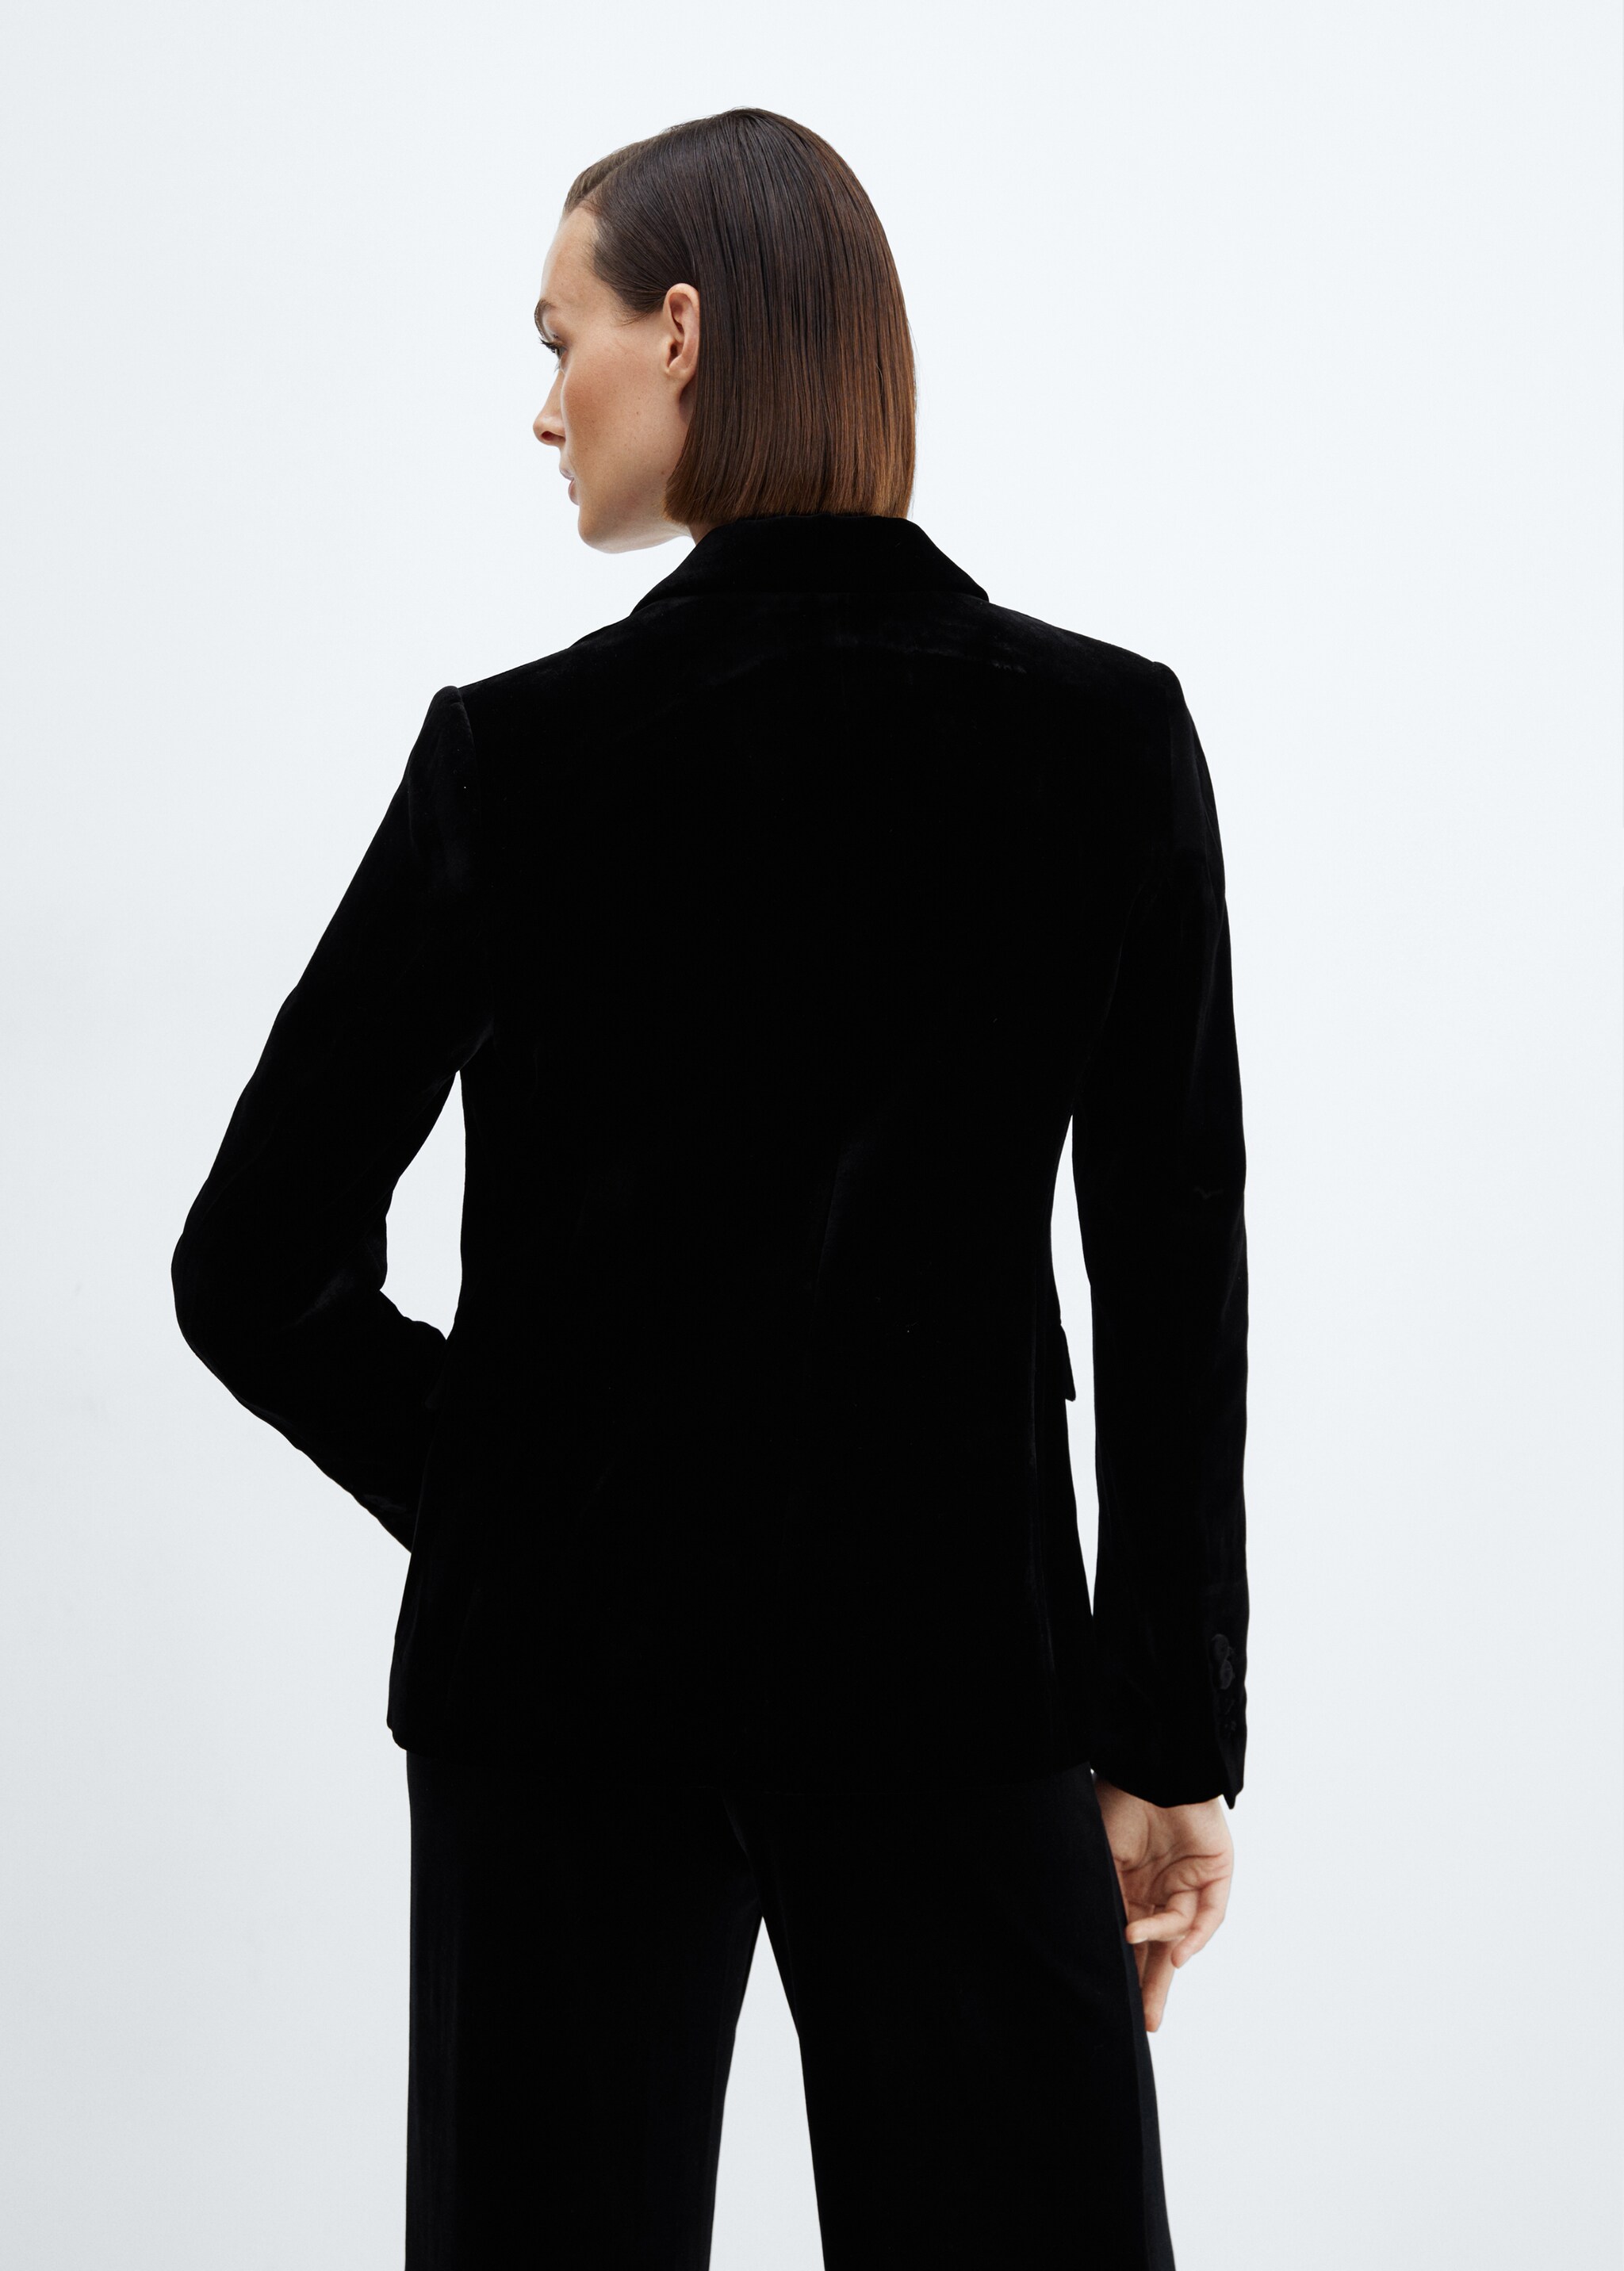 Velvet suit blazer - Reverse of the article